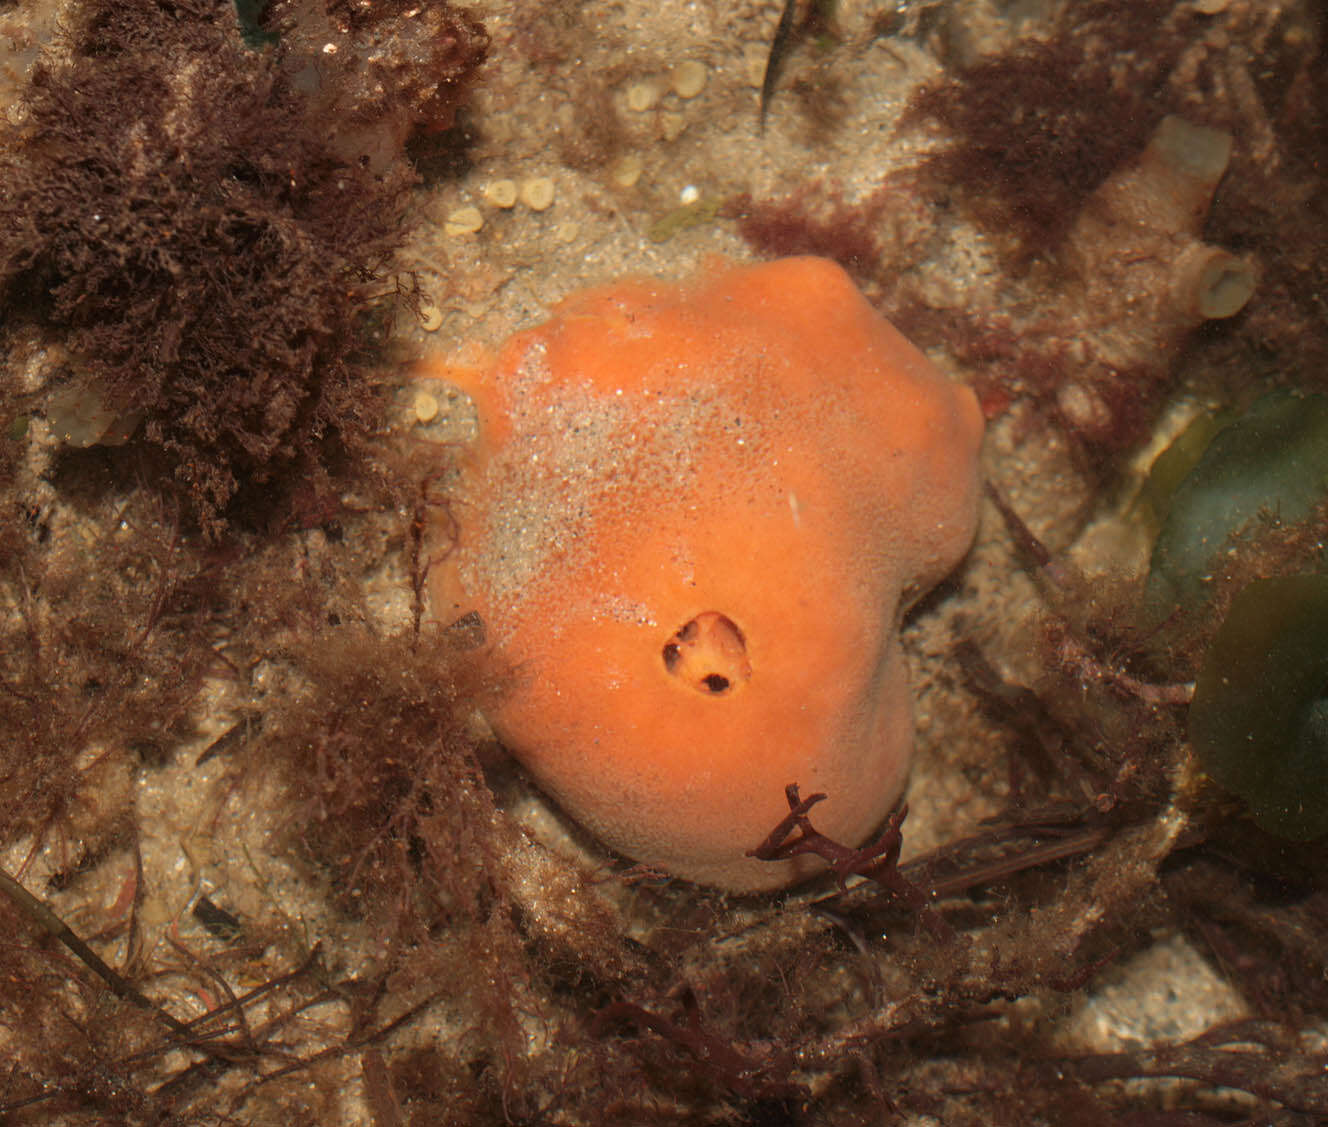 Image of Orange sponge